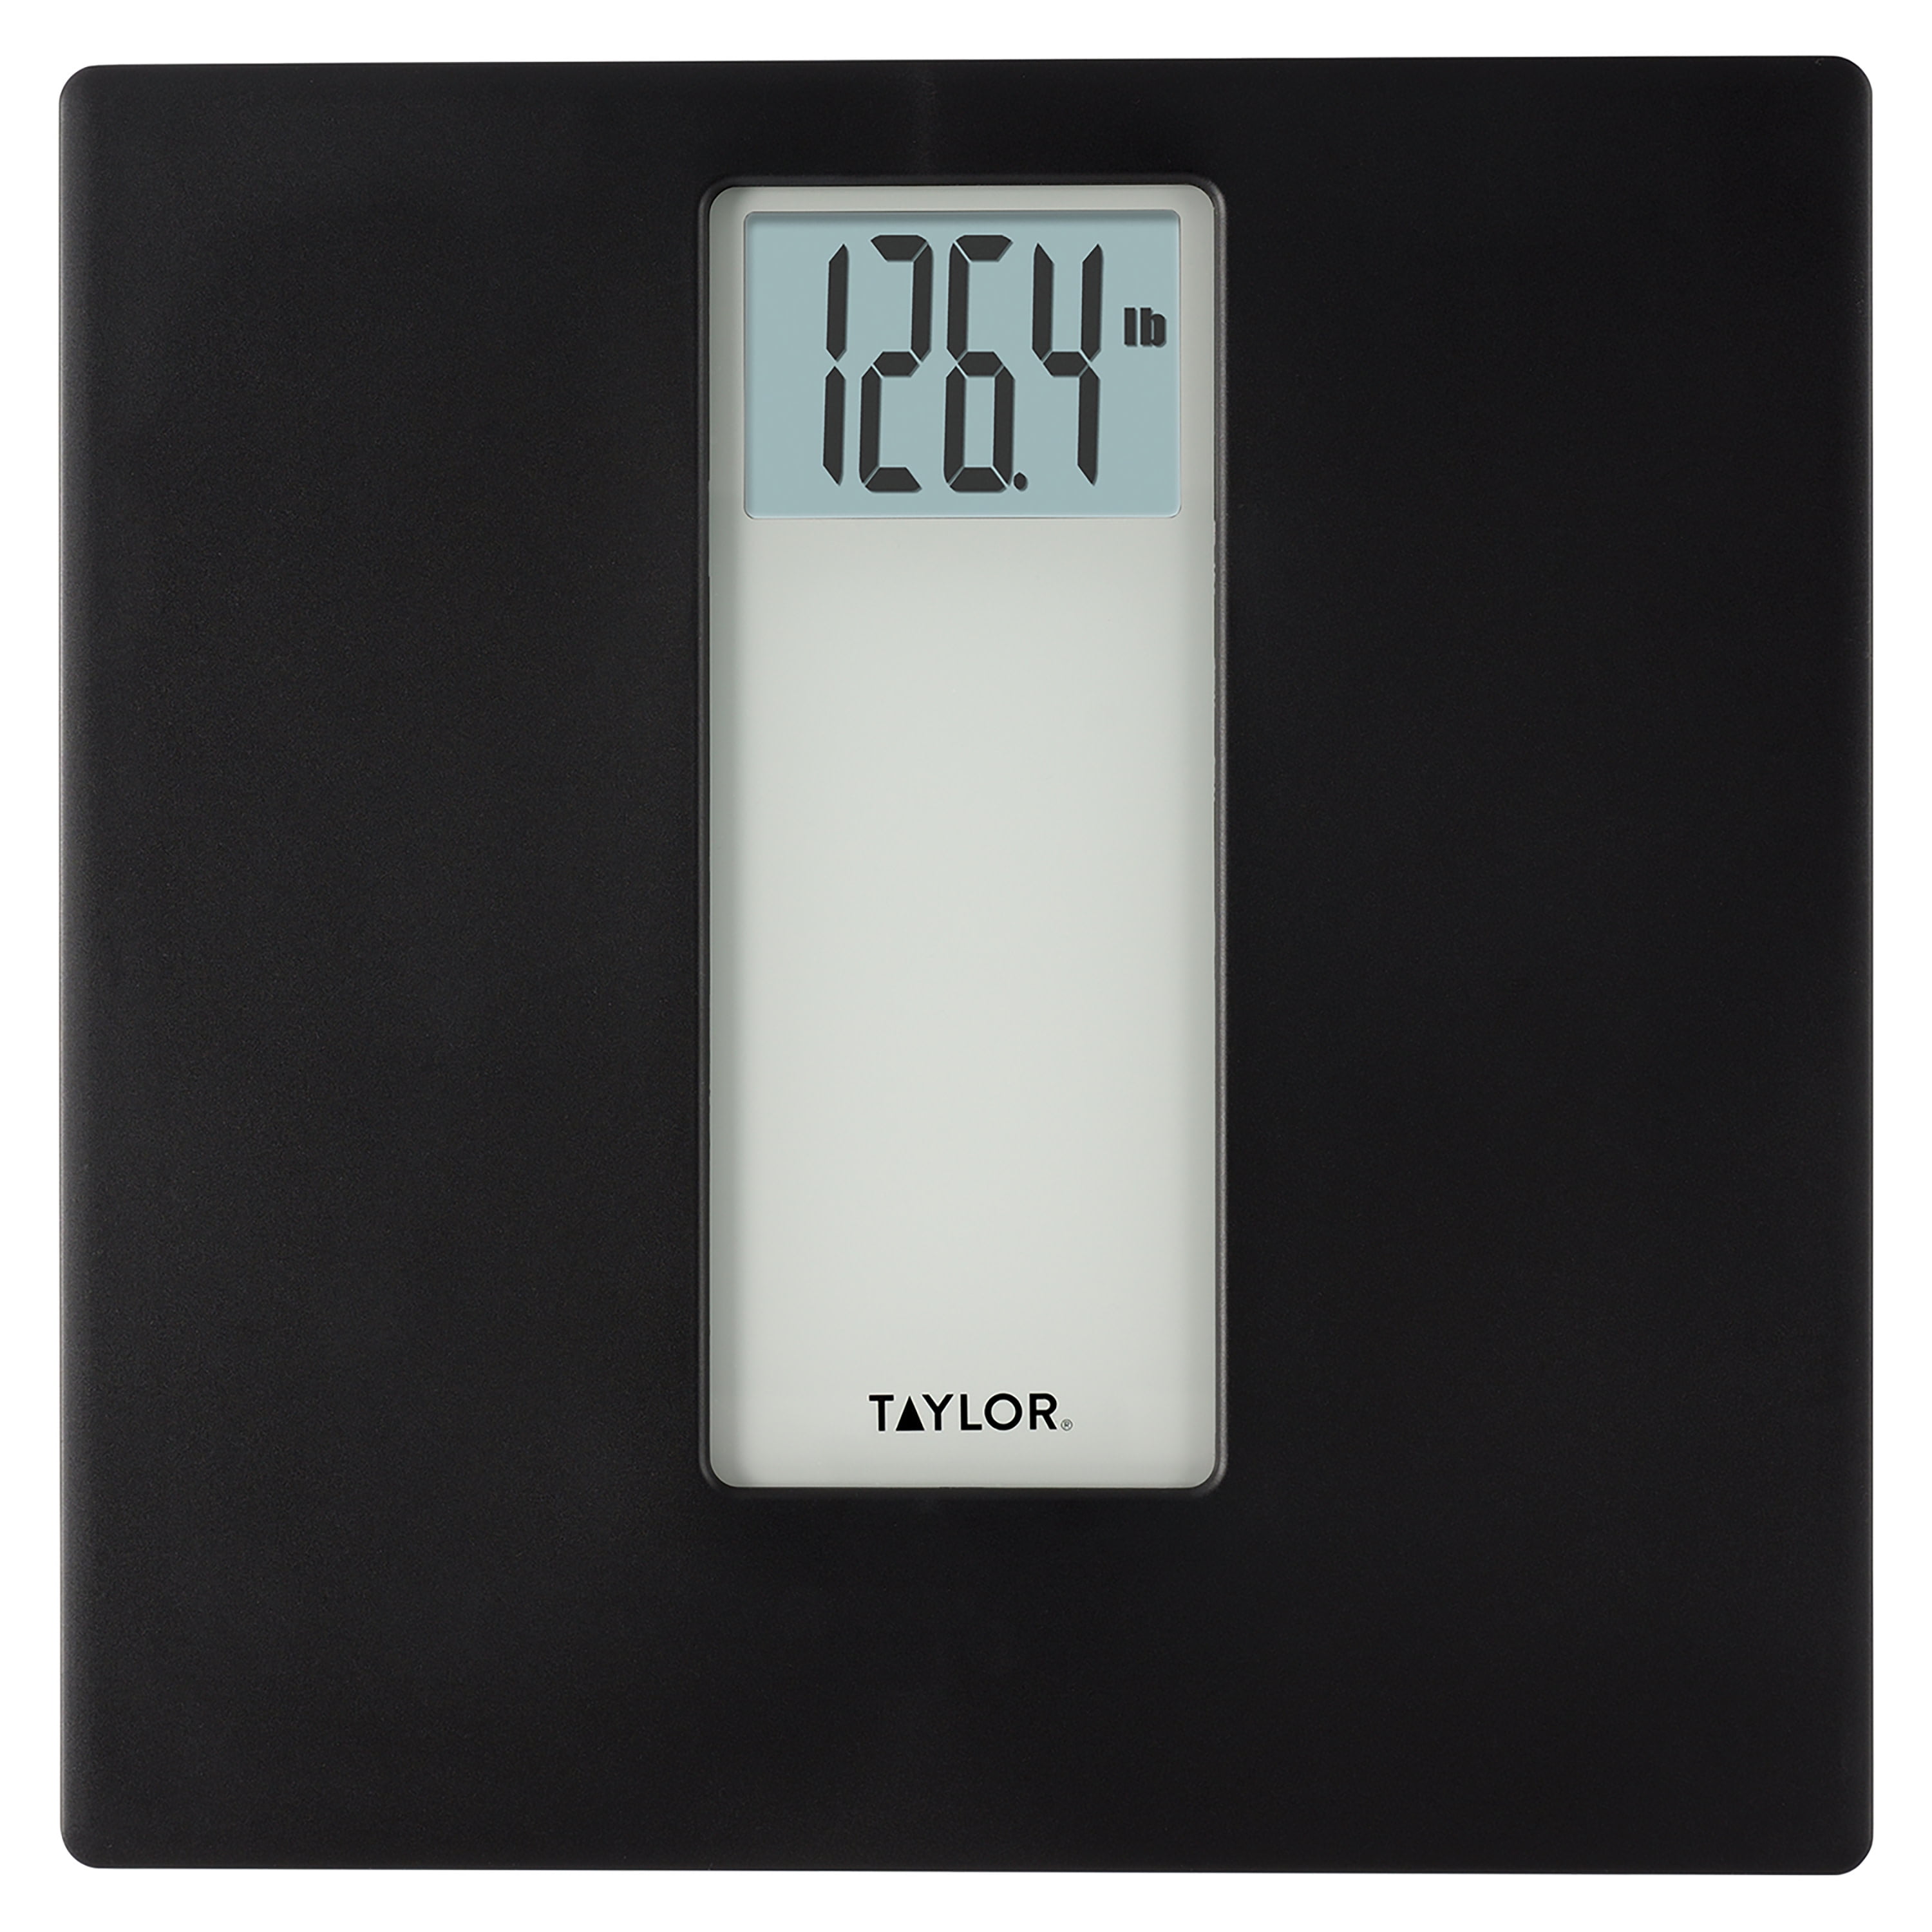 160 Kg Maximum Weight Capacity Styrene 350 Lb Taylor Digital Medical Scale 